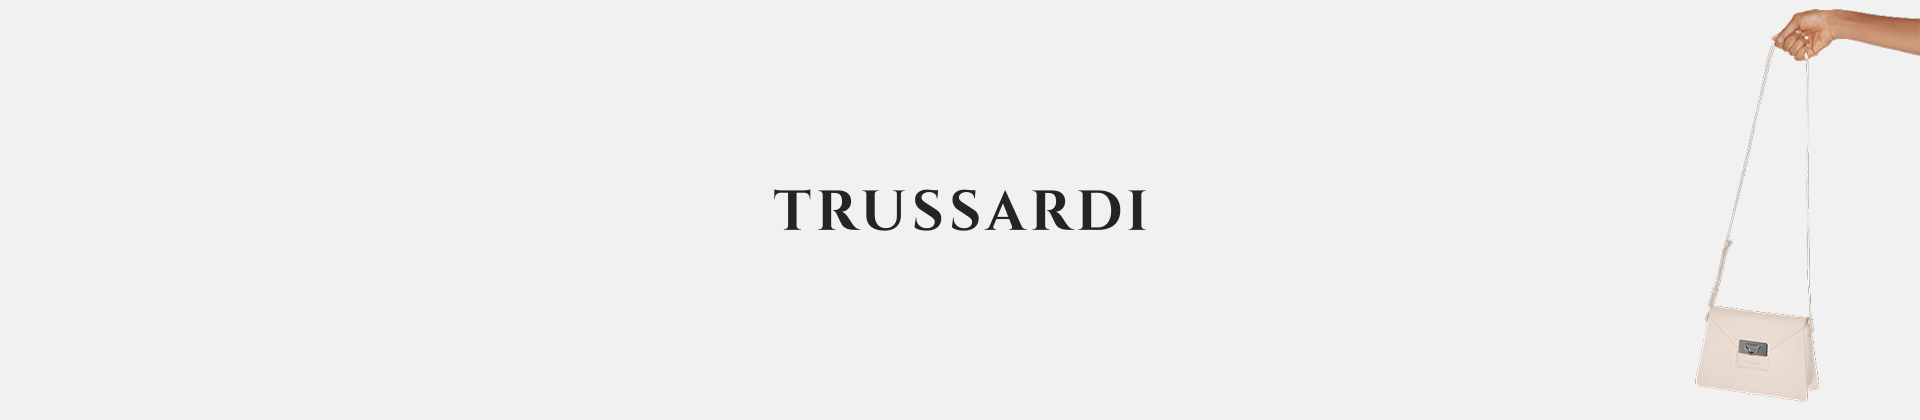 Trussardi casual shoe women for sale Sign Online